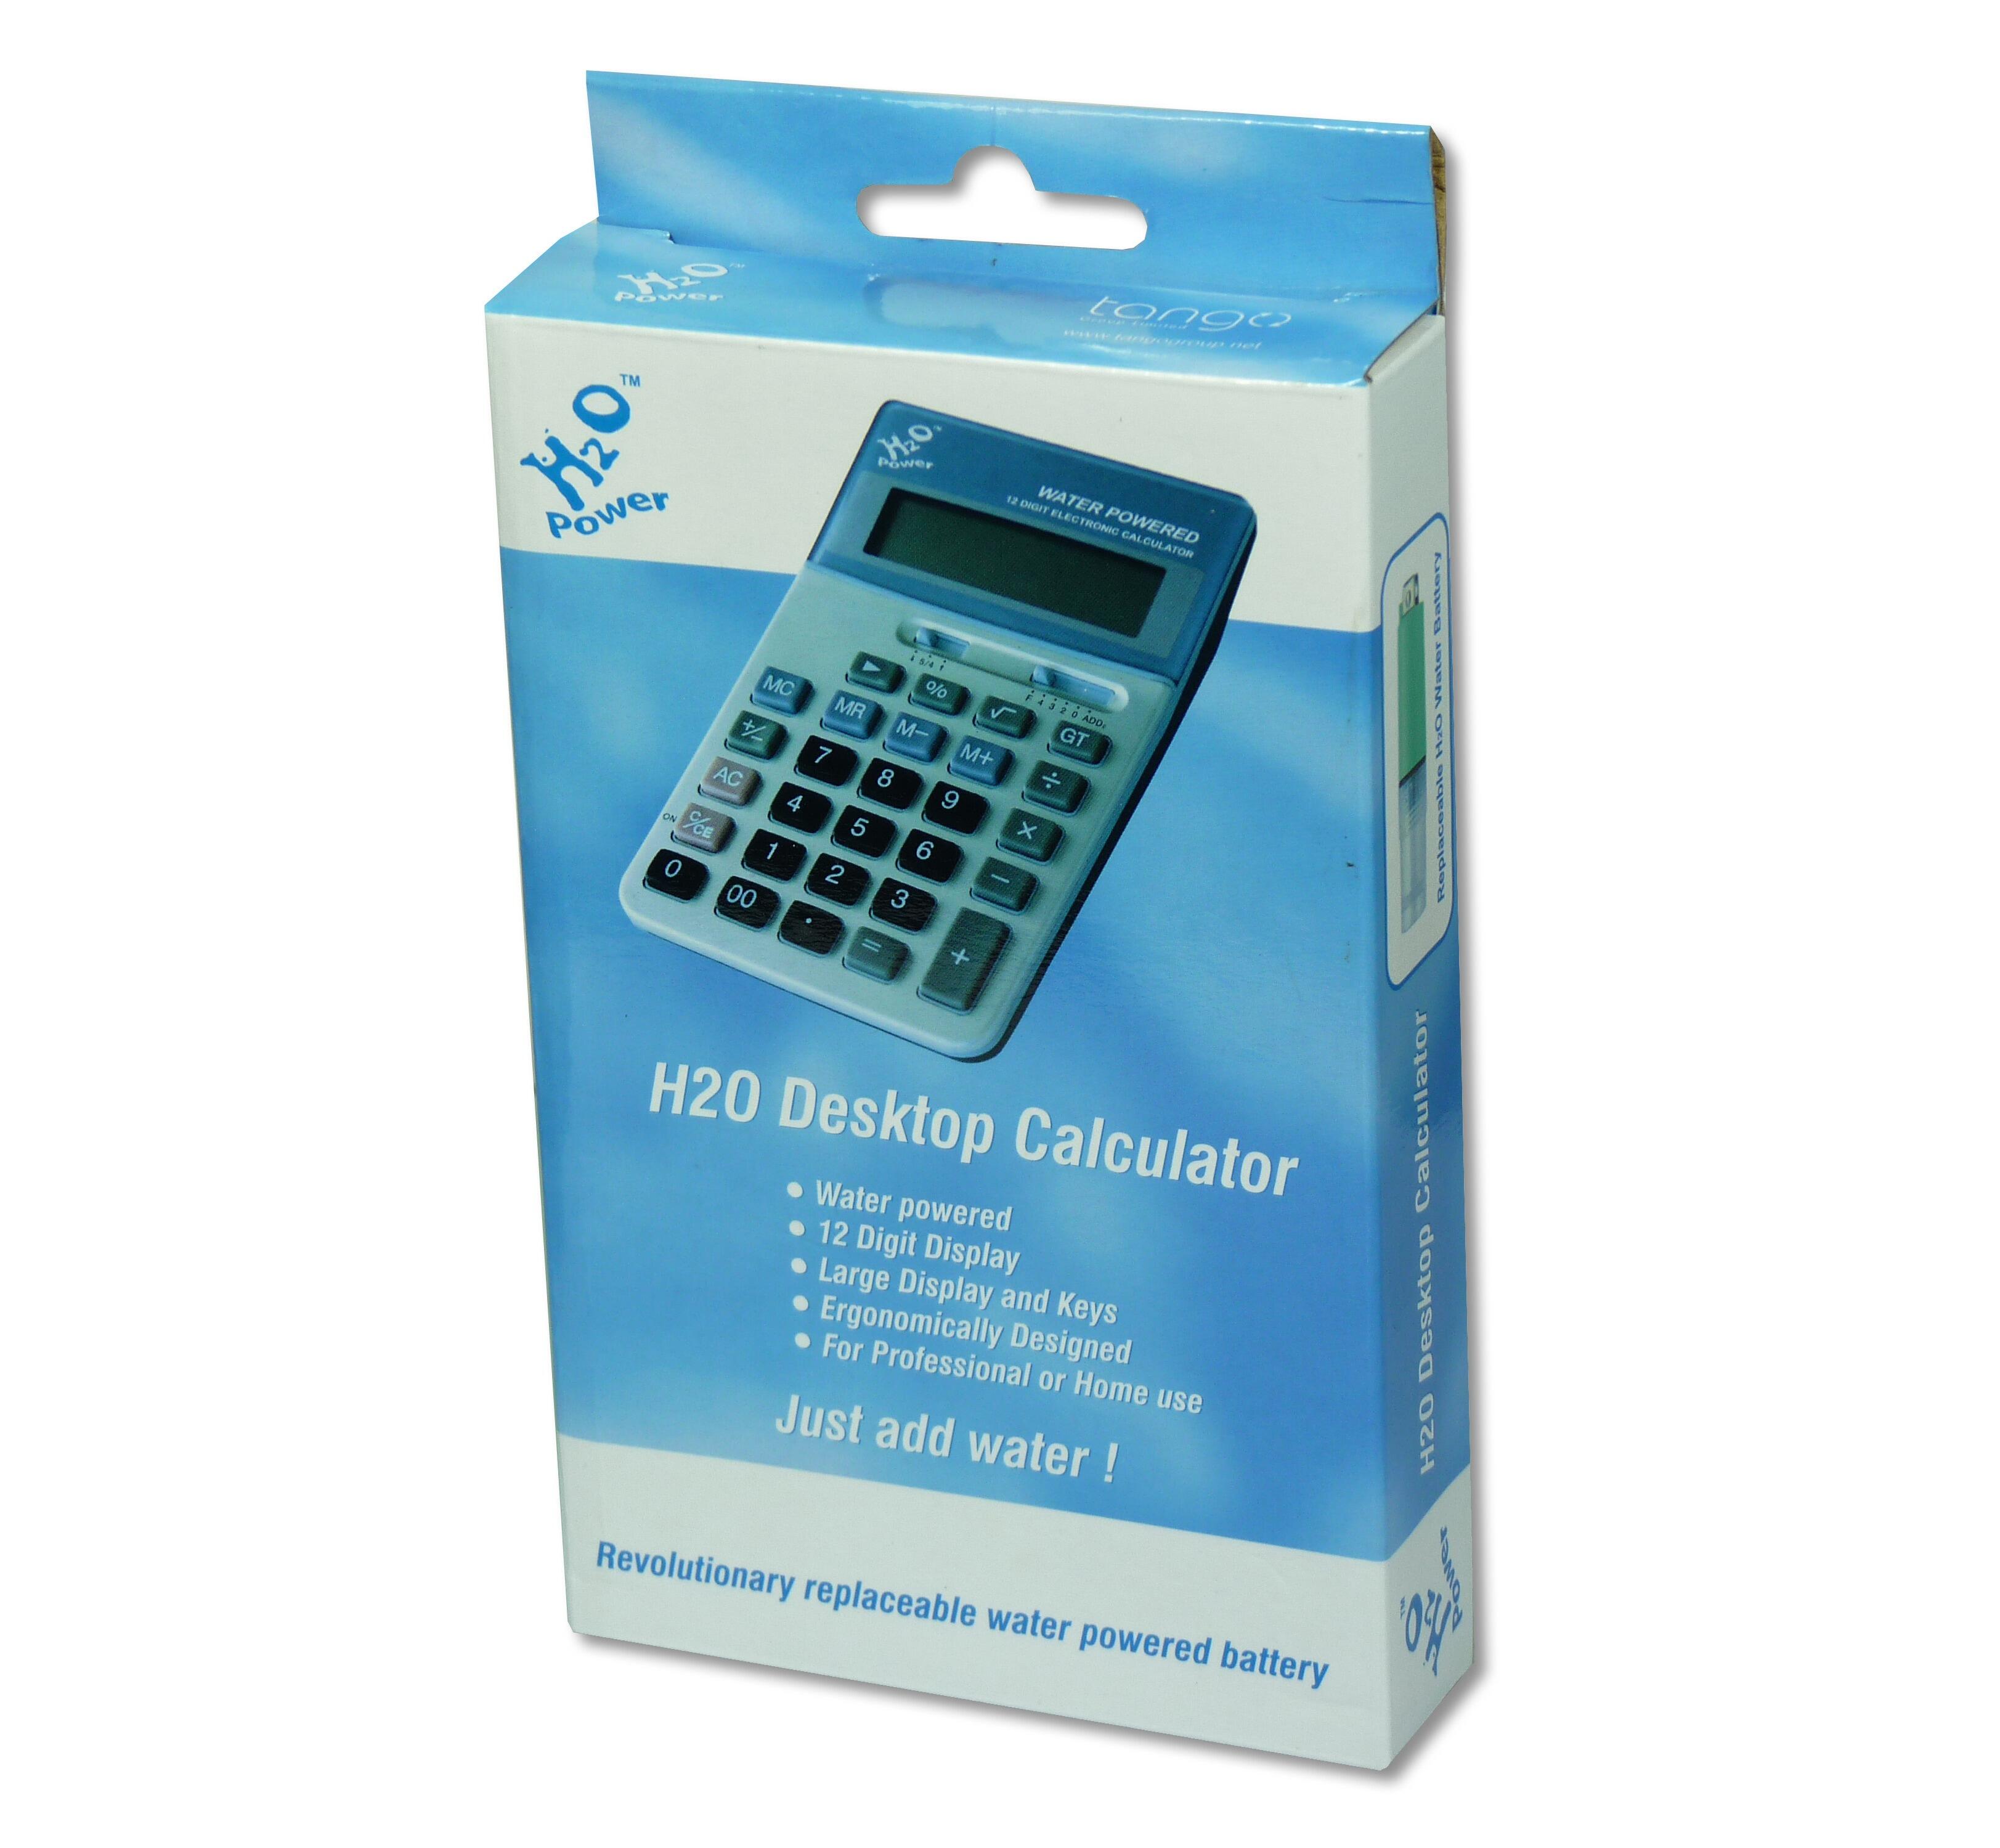 H2o Desktop Calculator package